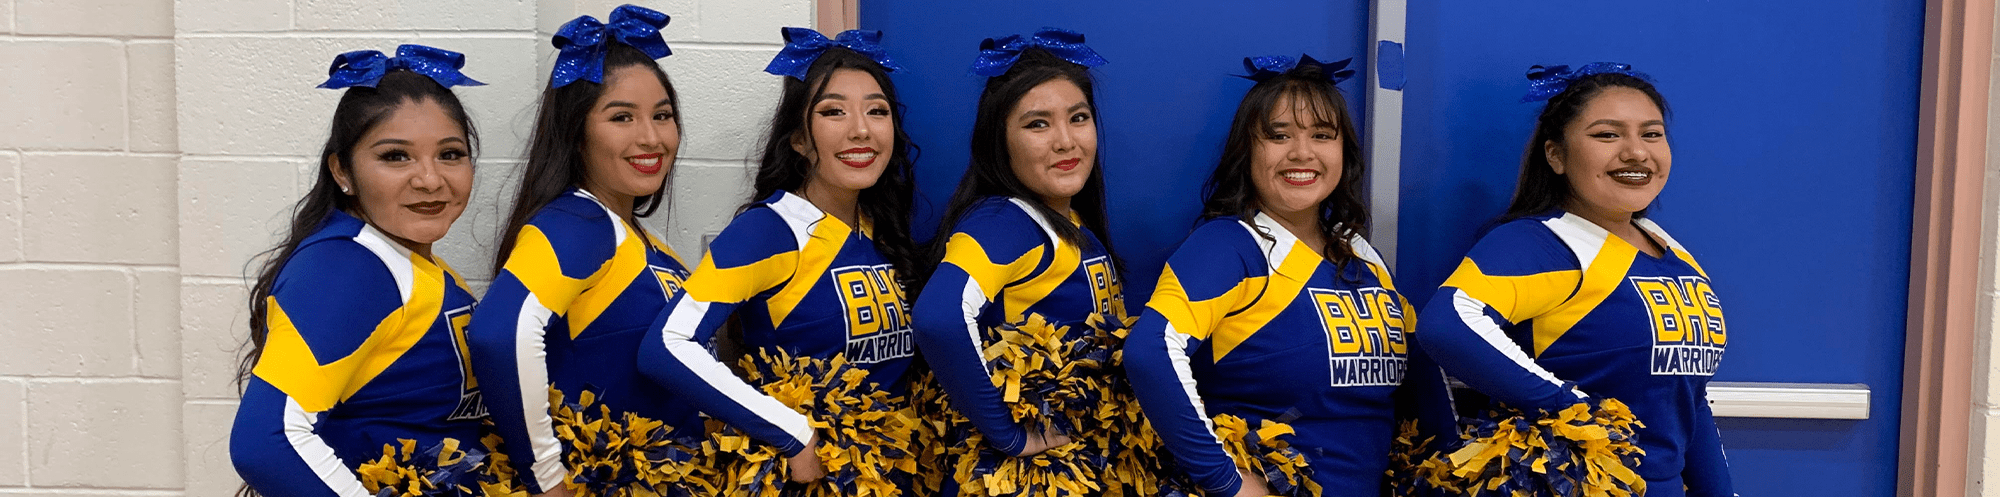 Six BHS Warrior cheerleaders posing together